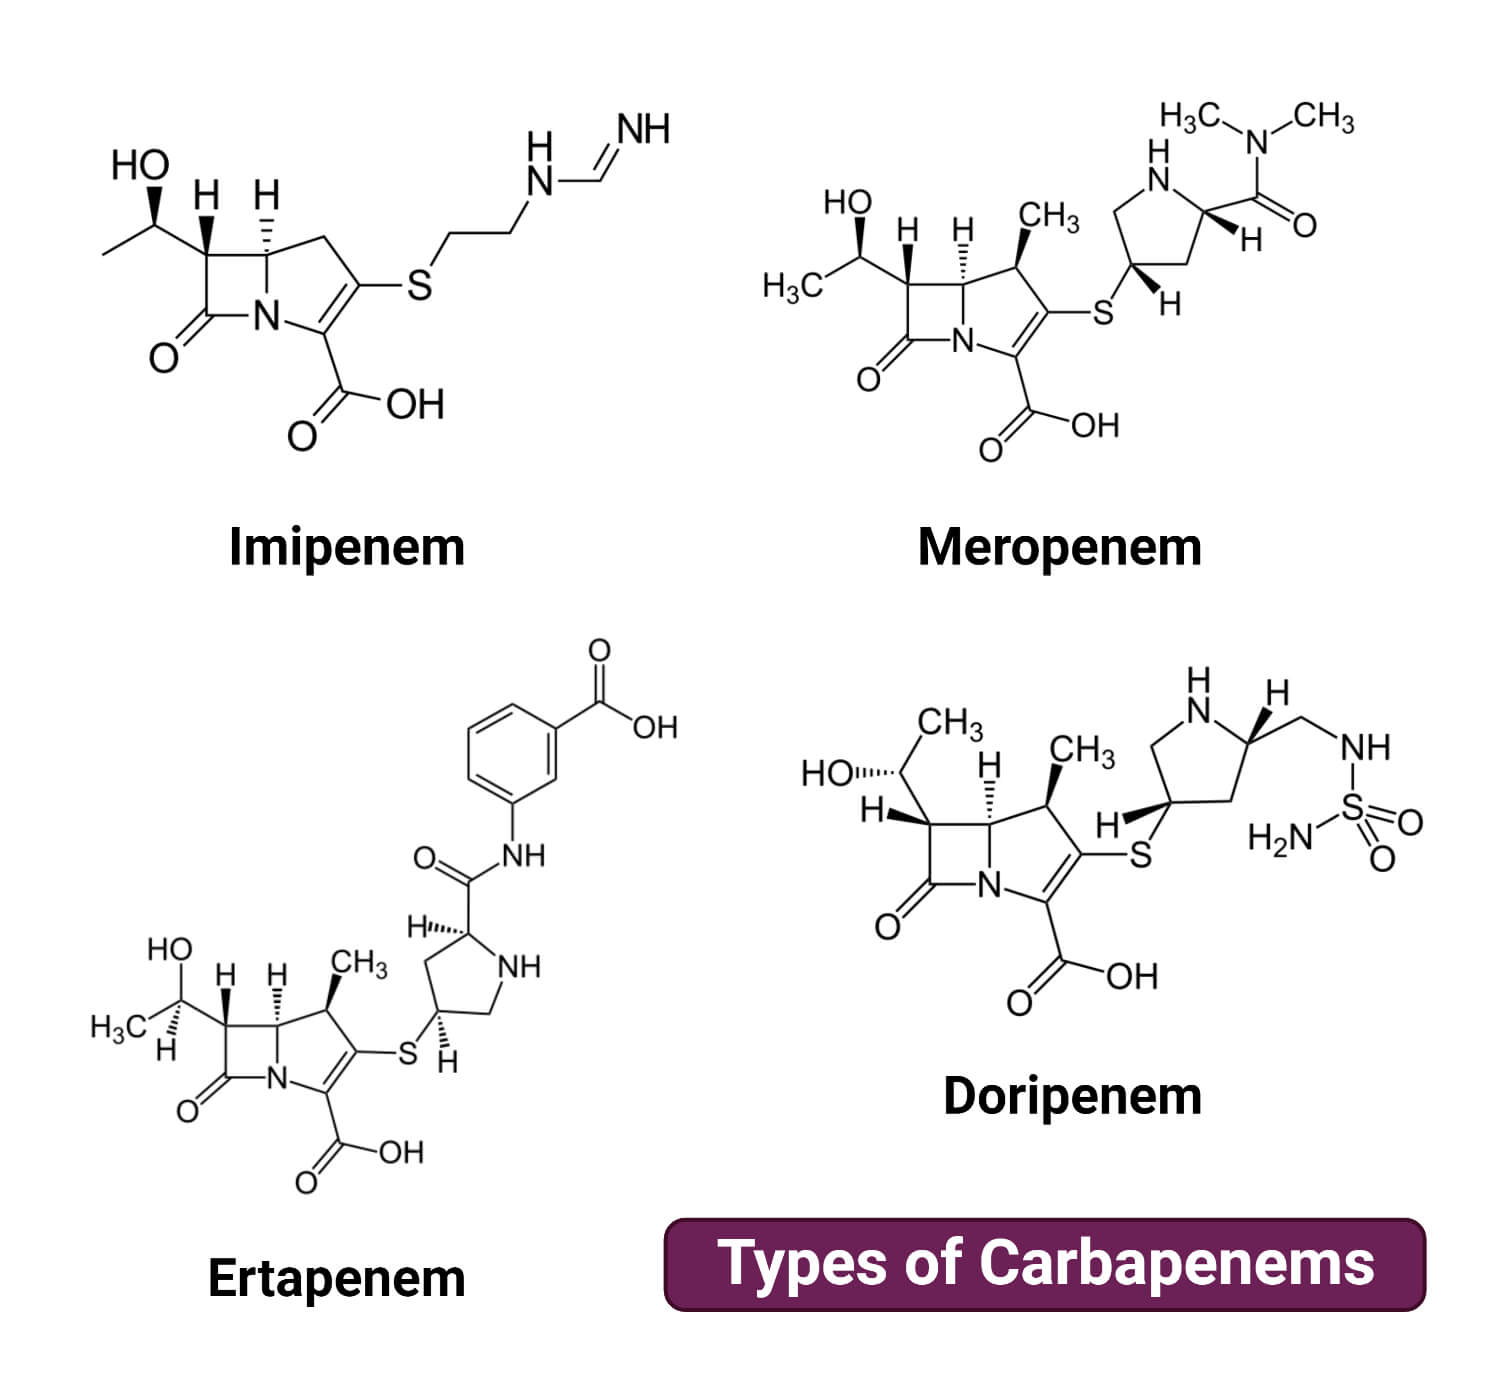 Types of Carbapenems